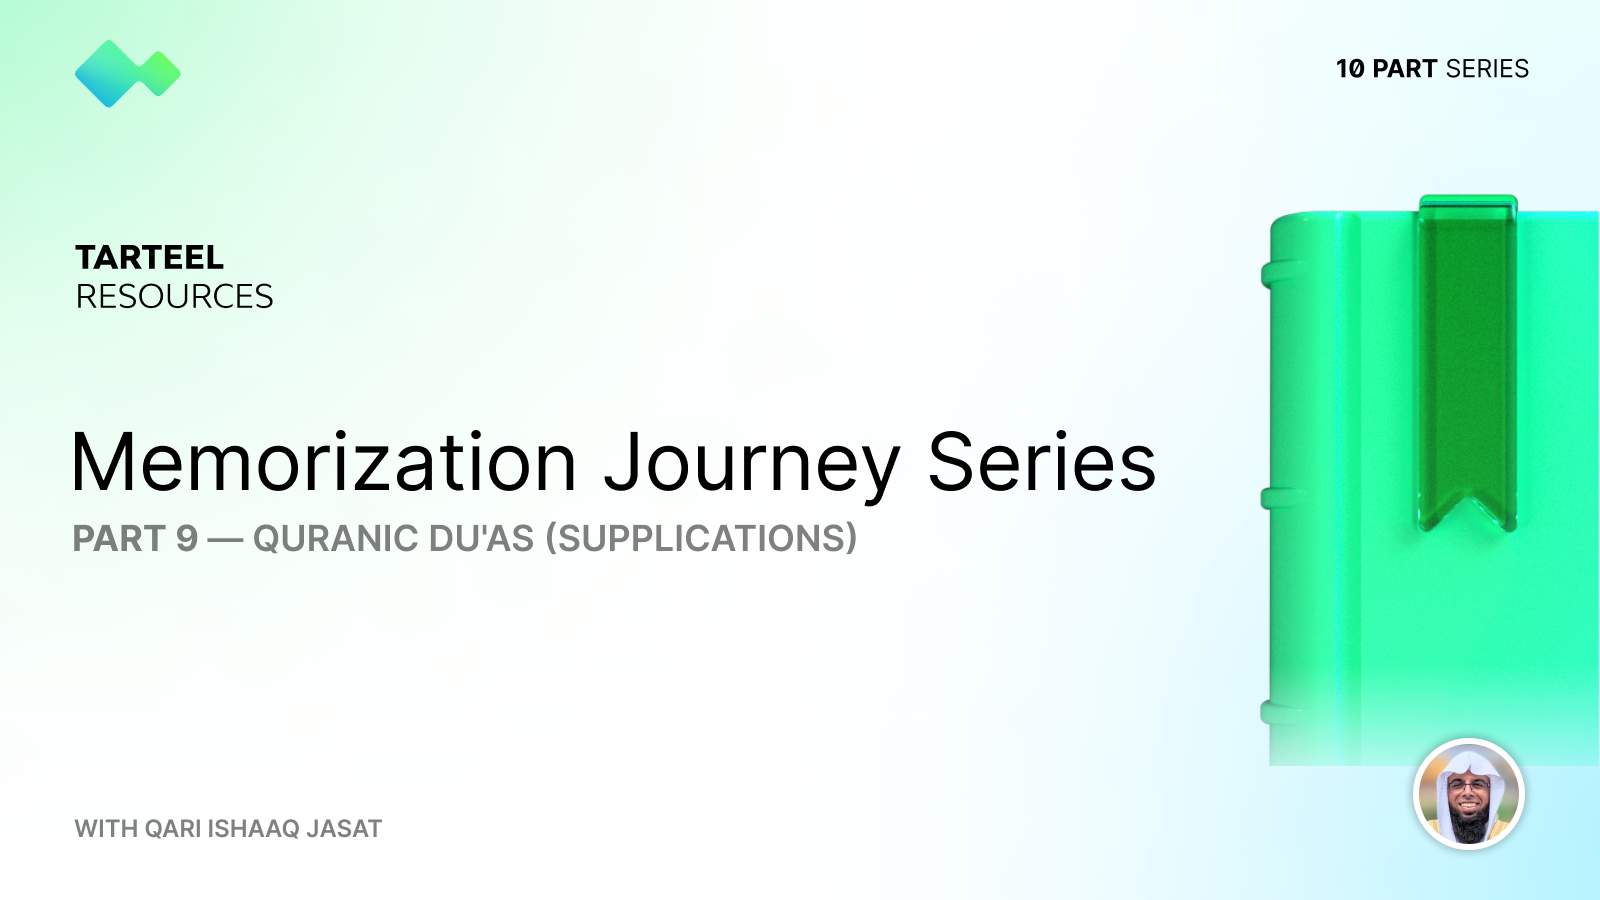 Memorization Journey Series, Part 9 - Quranic Duas (Supplications) with Qari Ishaaq Jasat